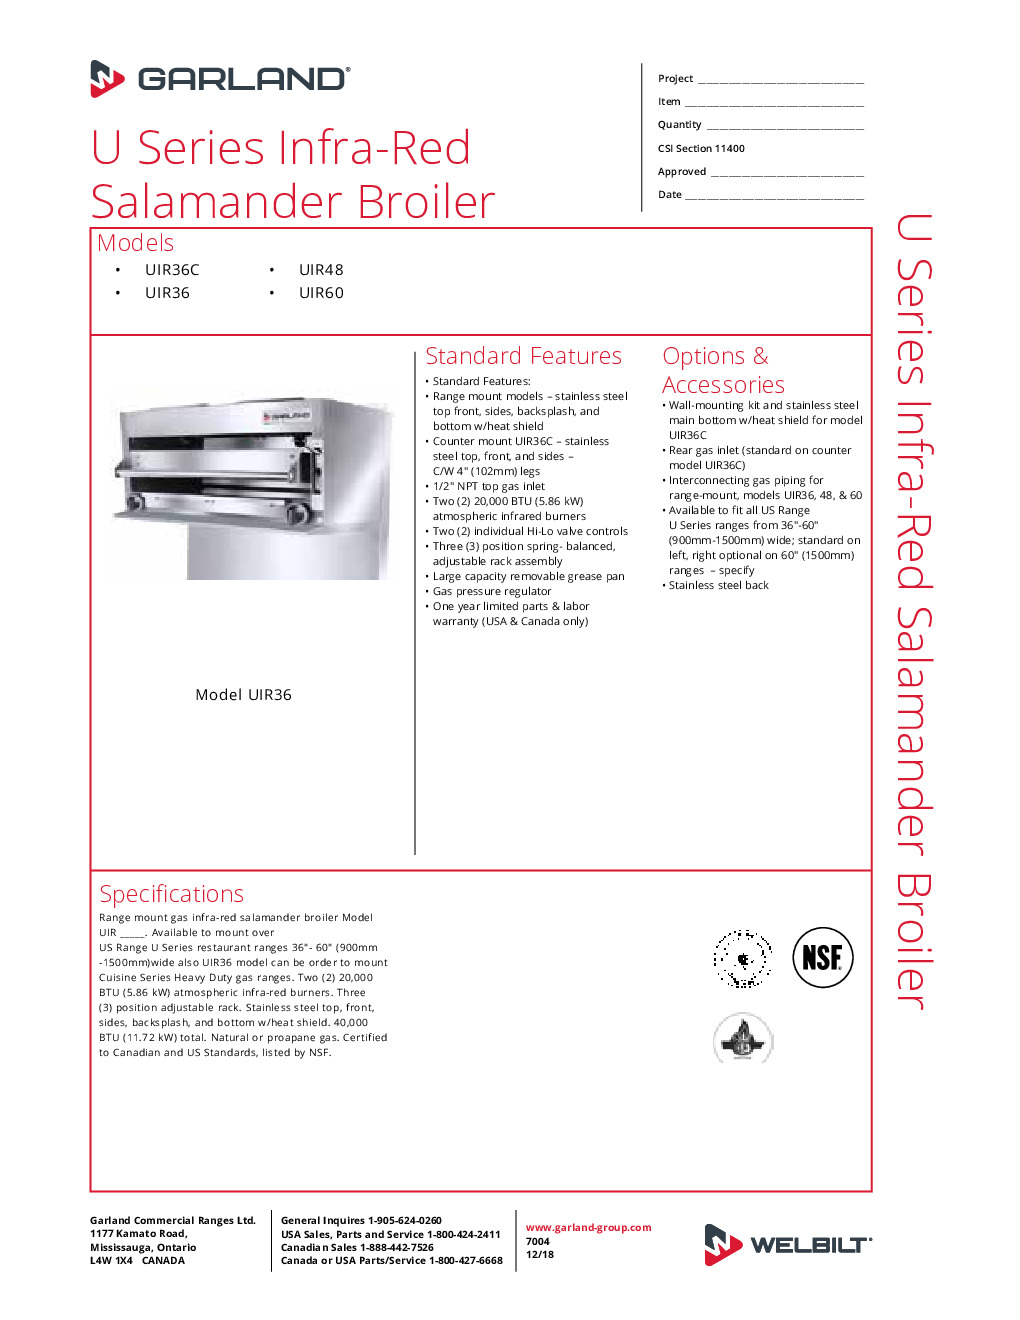 Garland US Range UIR36C@CUISINE Gas Salamander Broiler